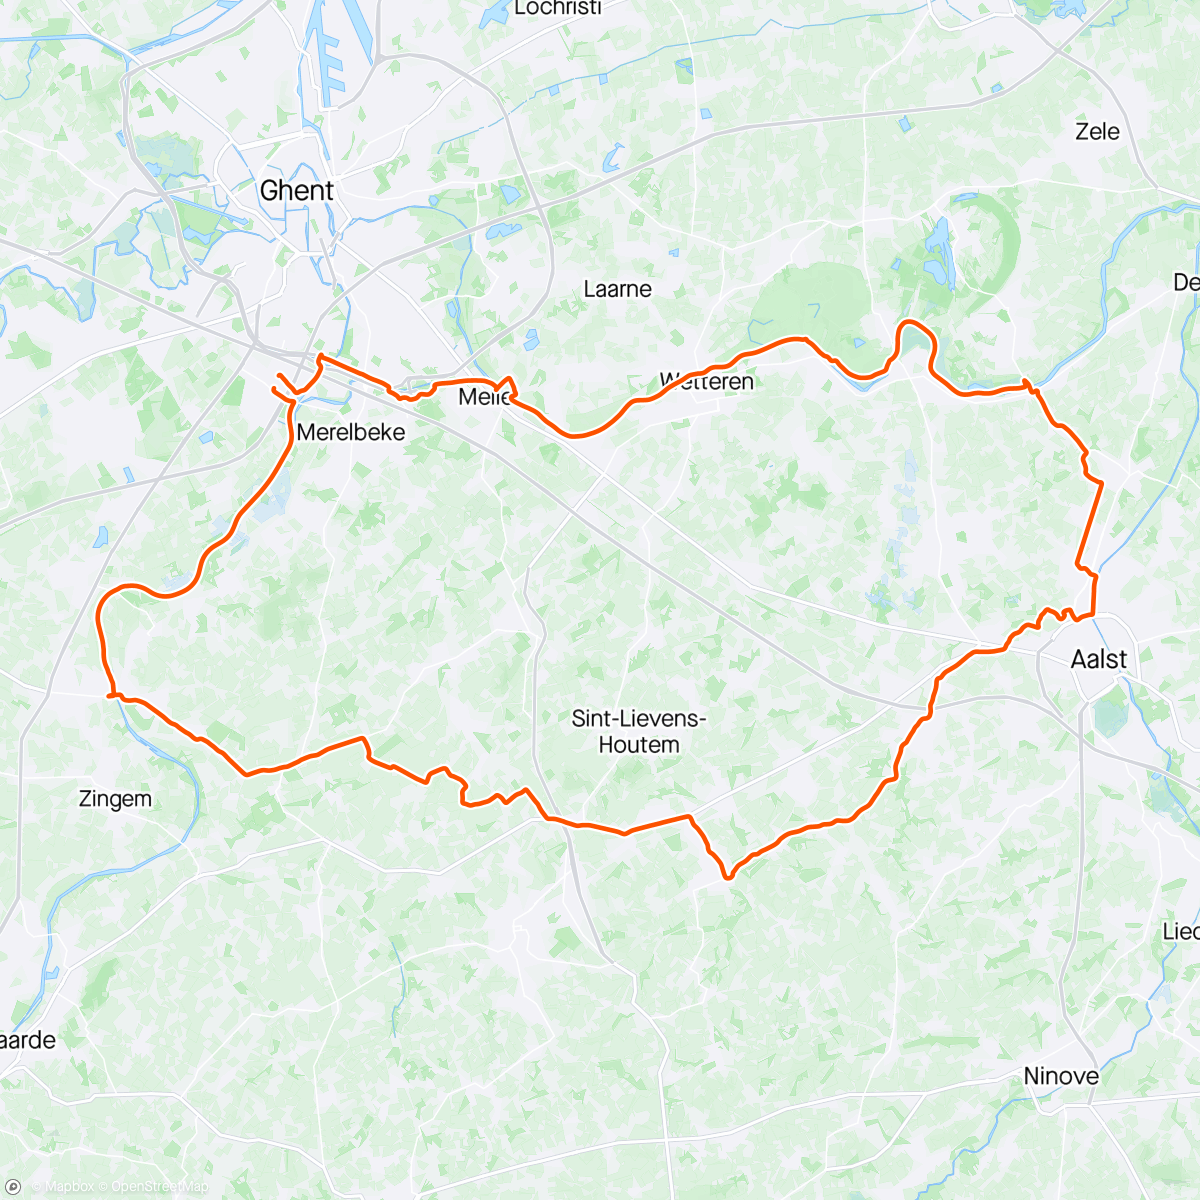 Mapa de la actividad (#1000km training rides…2 more to go, feeling ready)